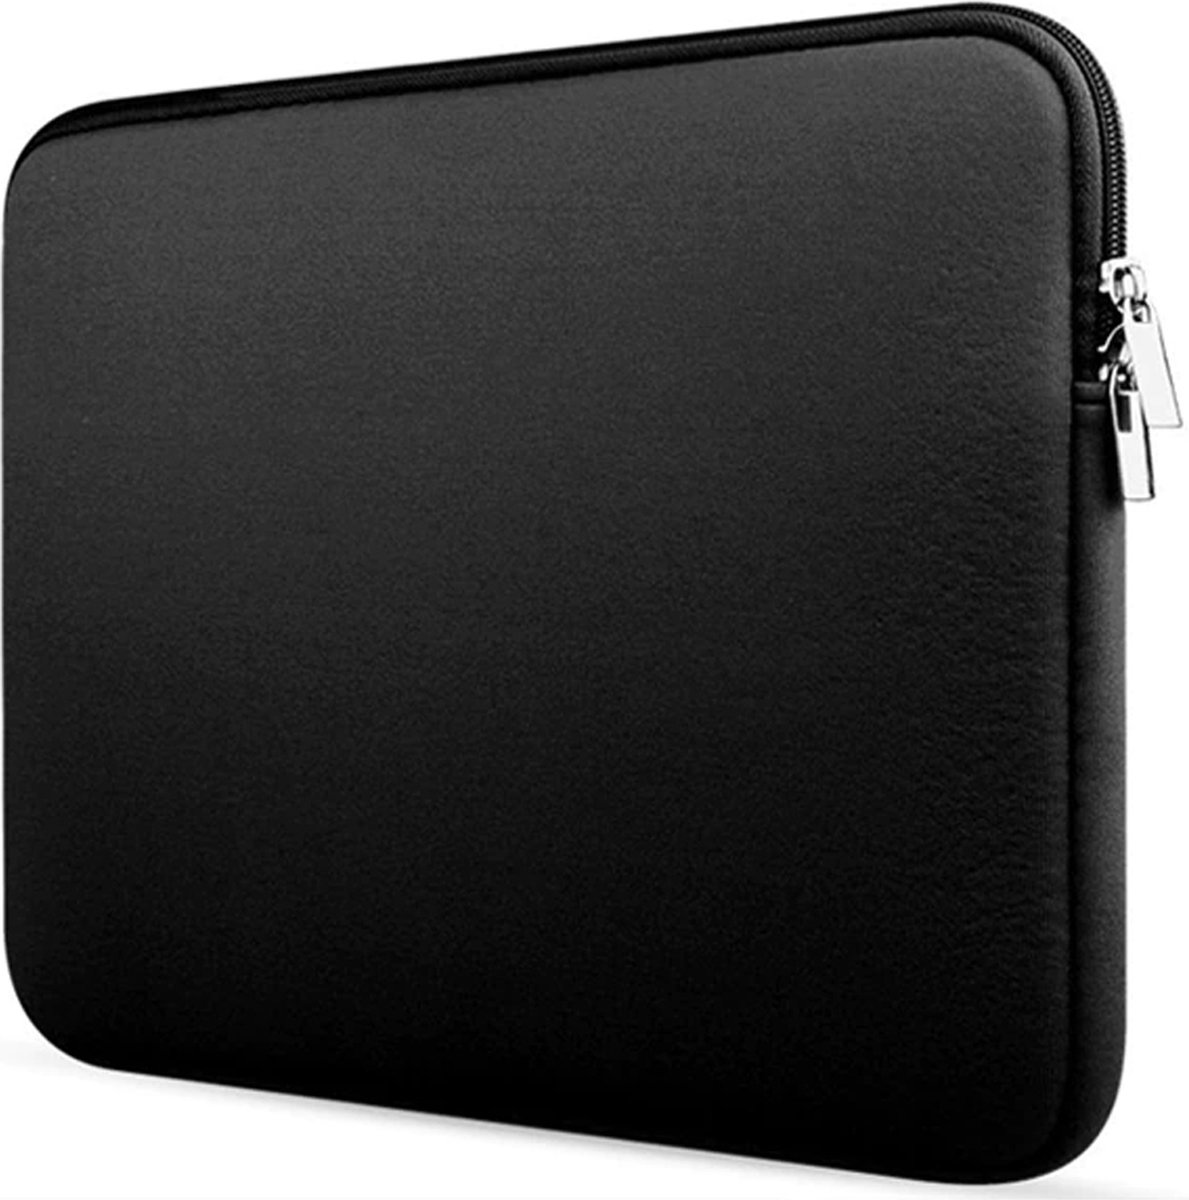 SoftTouch Laptophoes 13 inch - Macbook / IPad / Thinkpad - Sleeve met ritssluiting - Merkloos